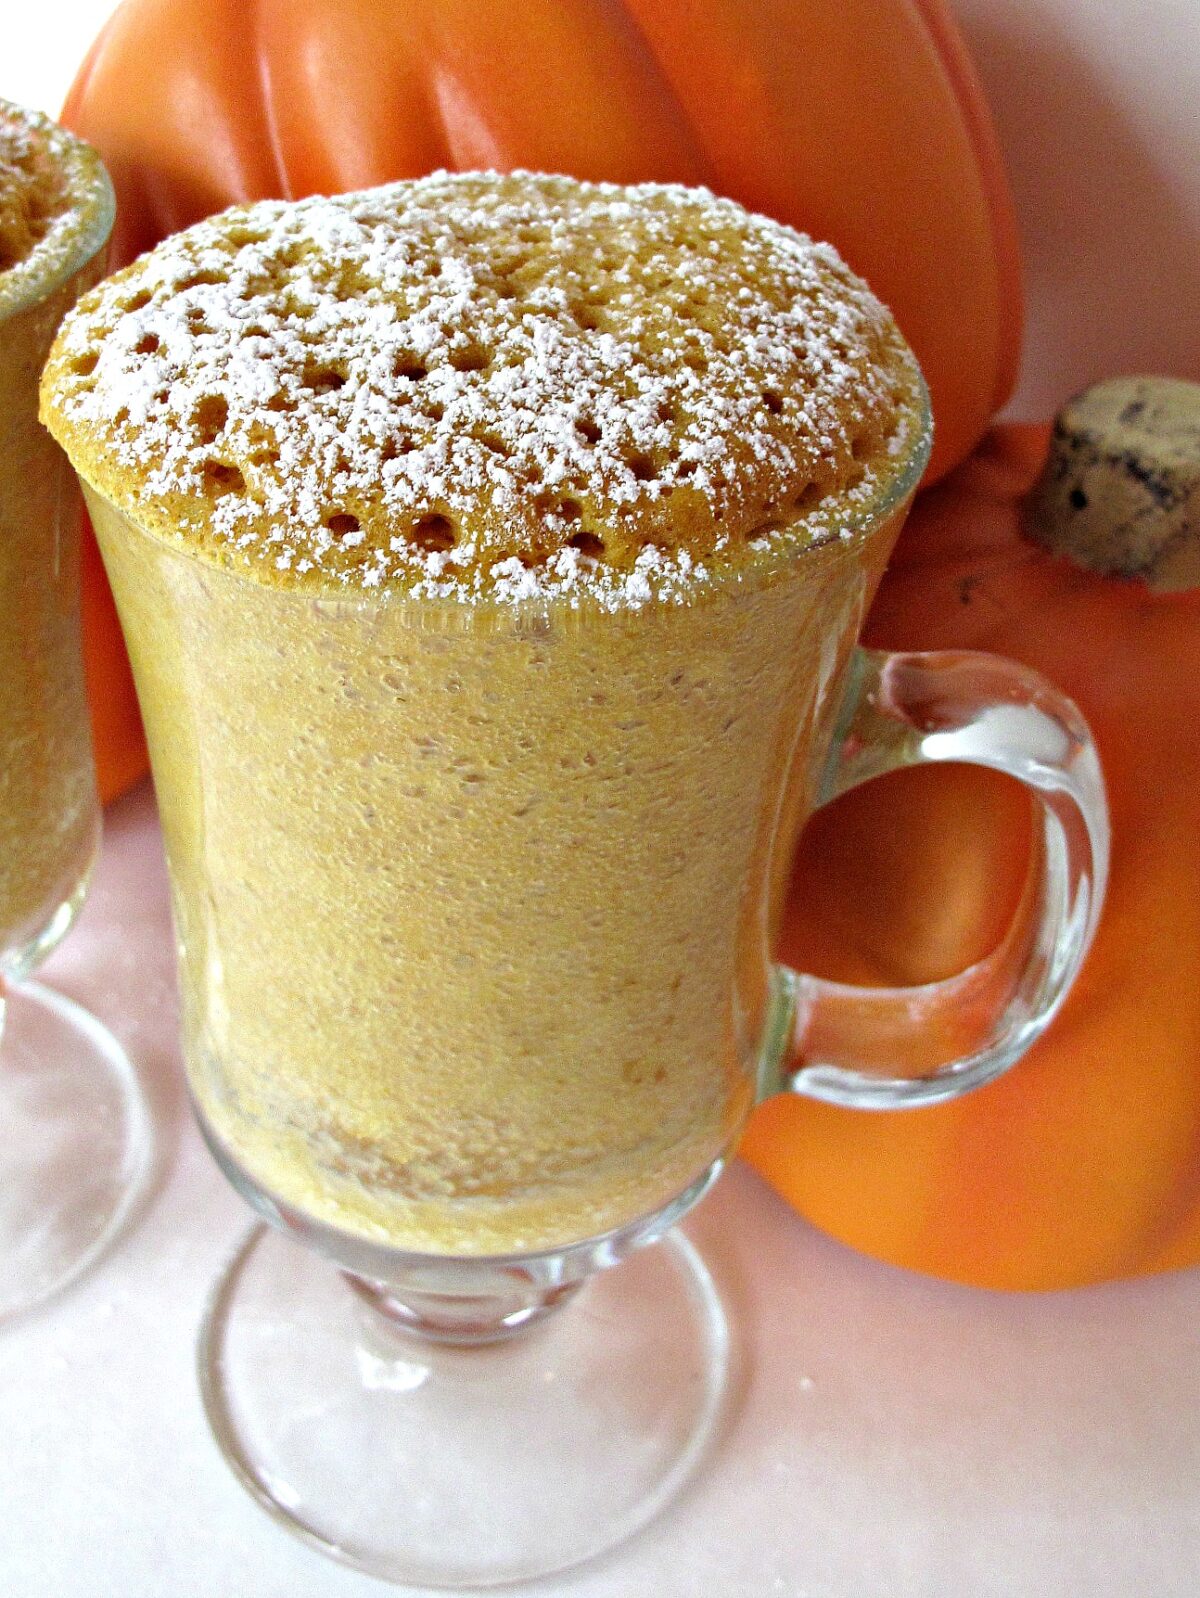 Pumpkin Spice mug cake in a glass mug topped with powdered sugar.